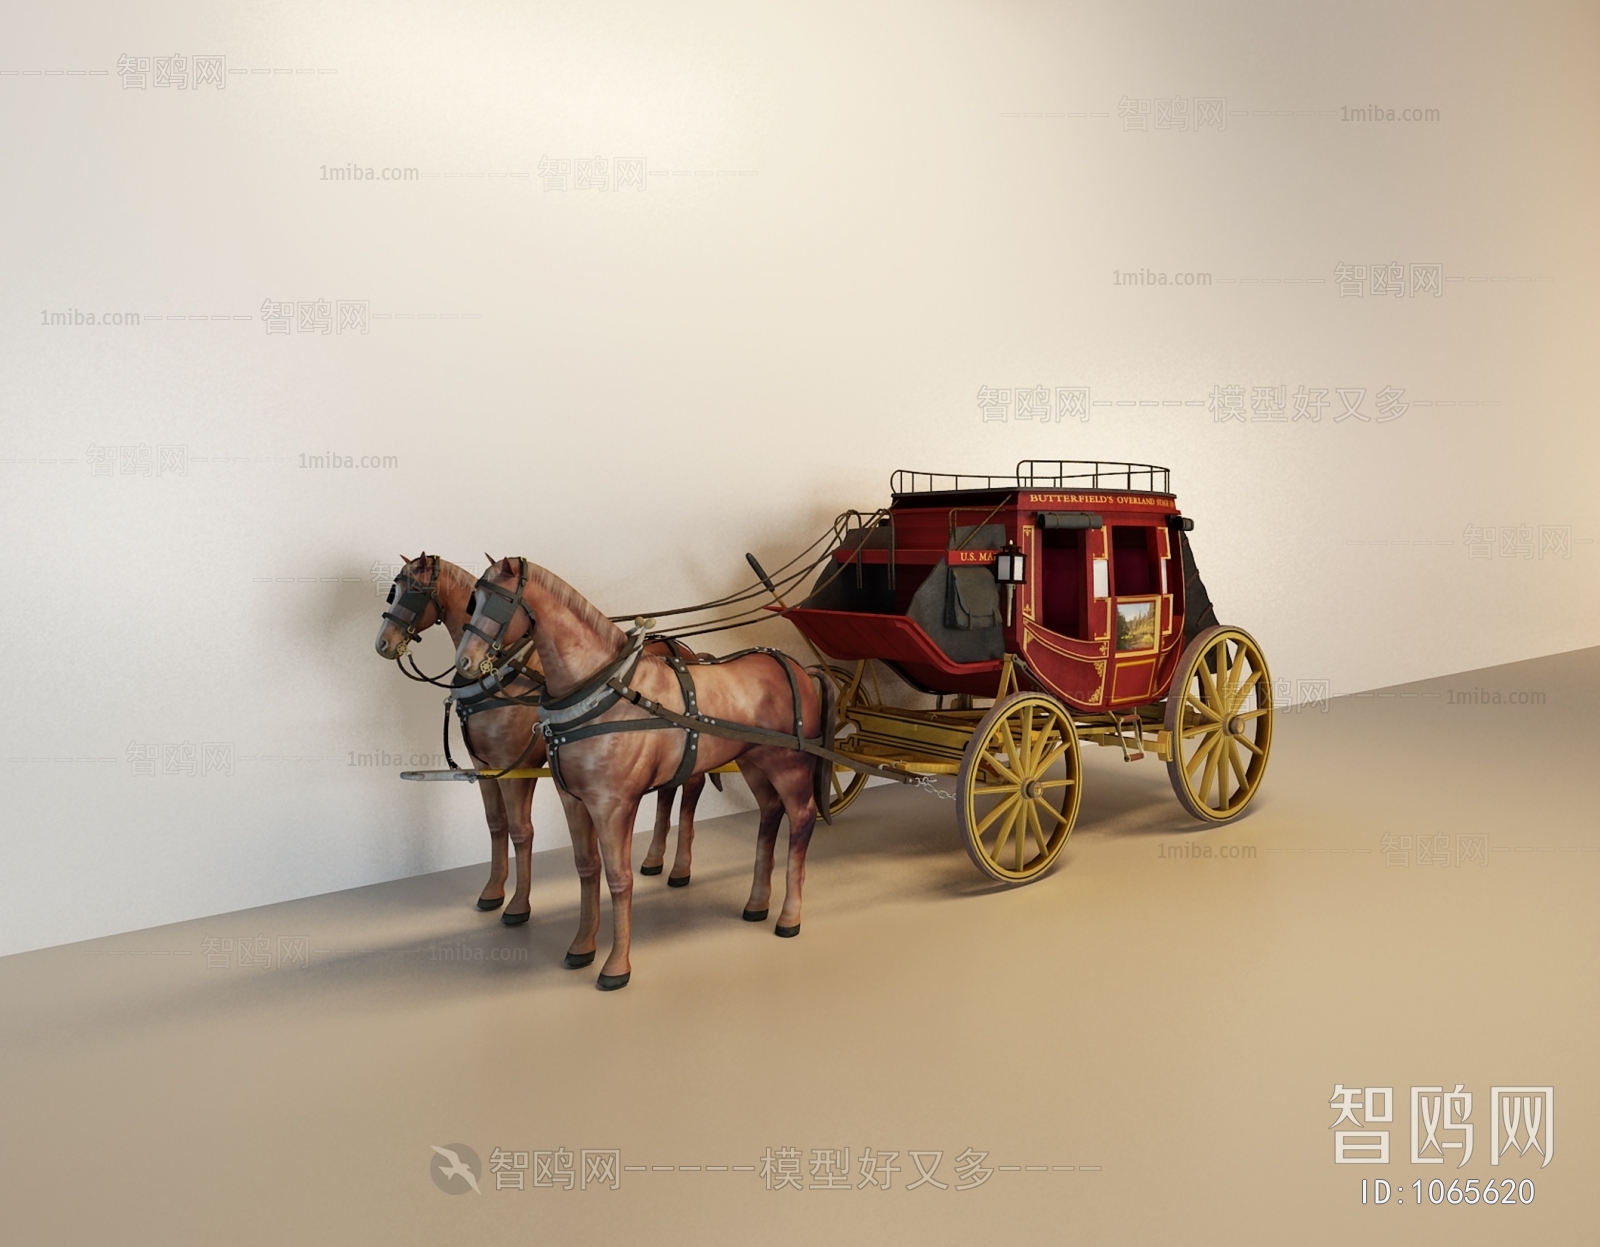 Chinese Style Transportation